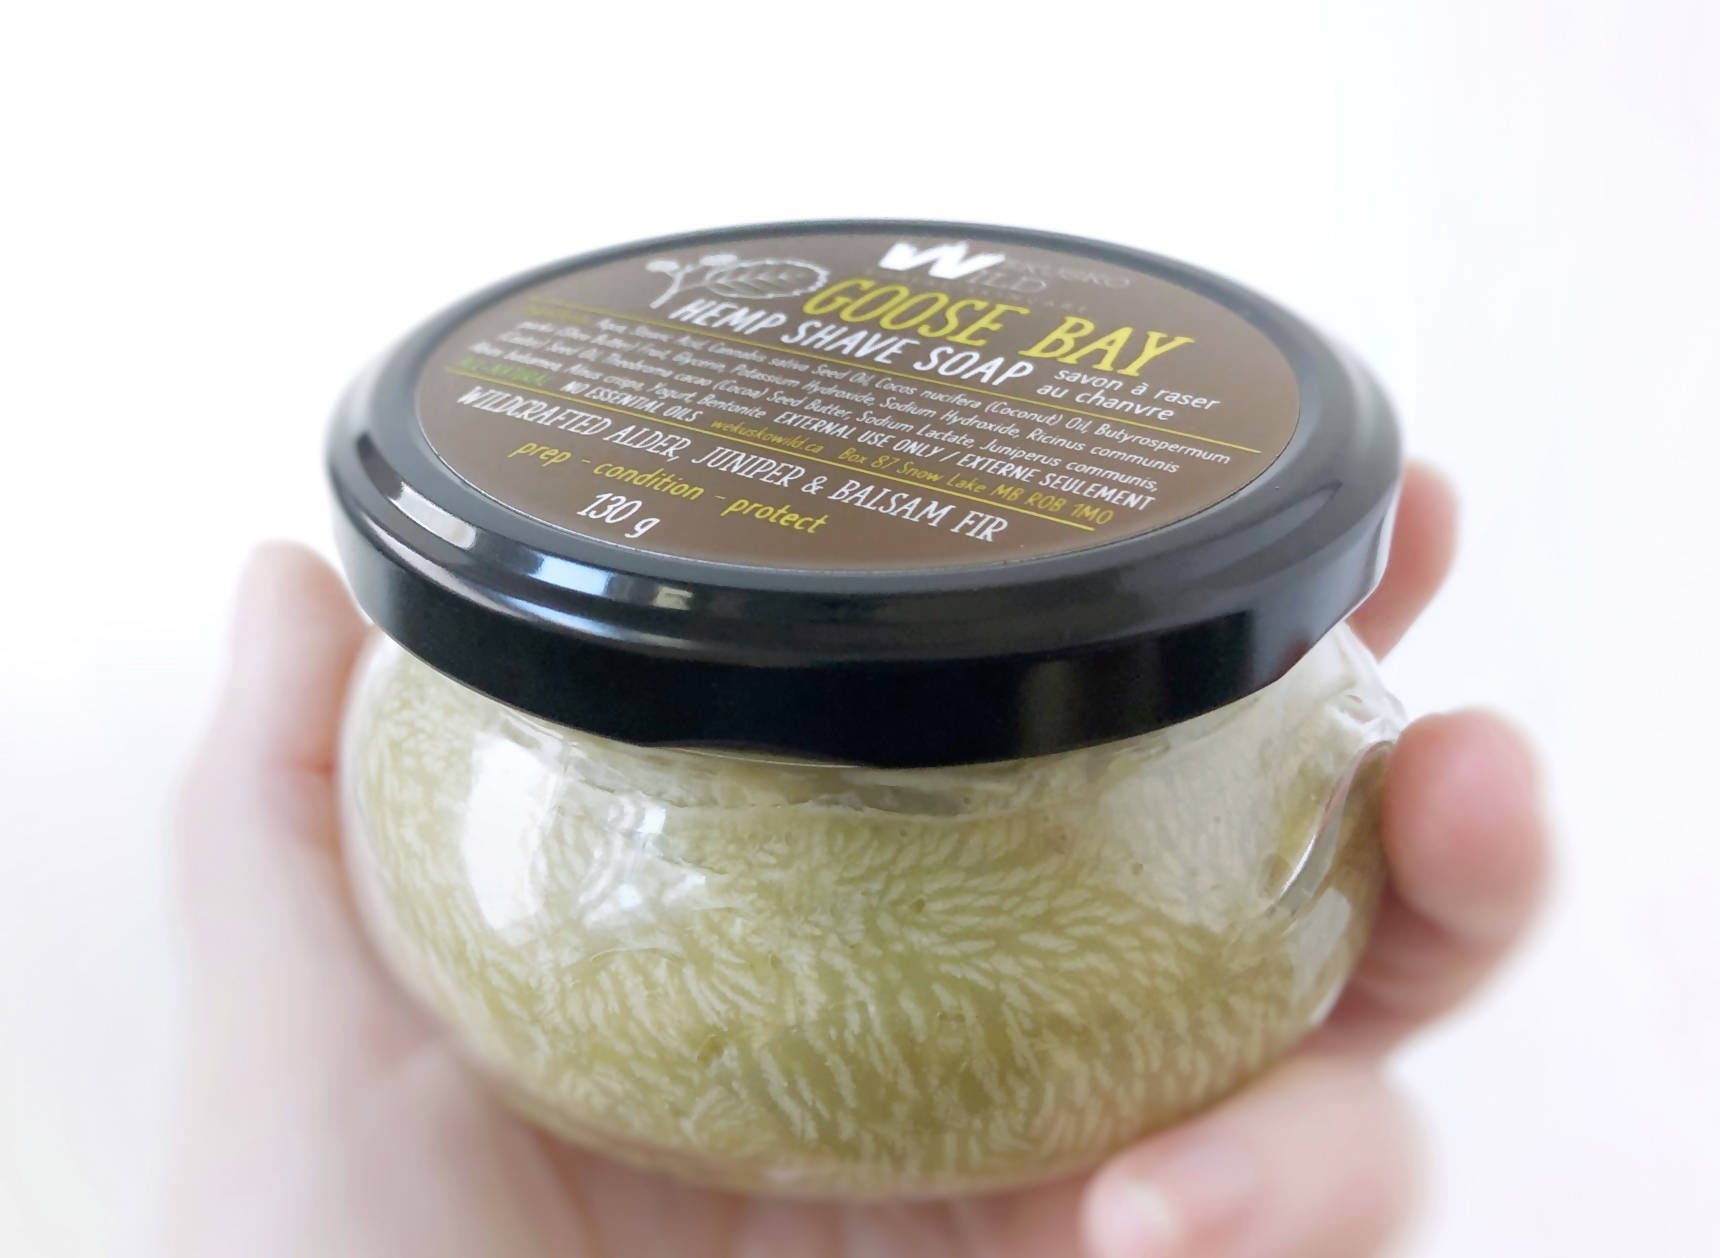 Goose Bay hemp shave soap - WEKUSKO WILD Boreal Skincare